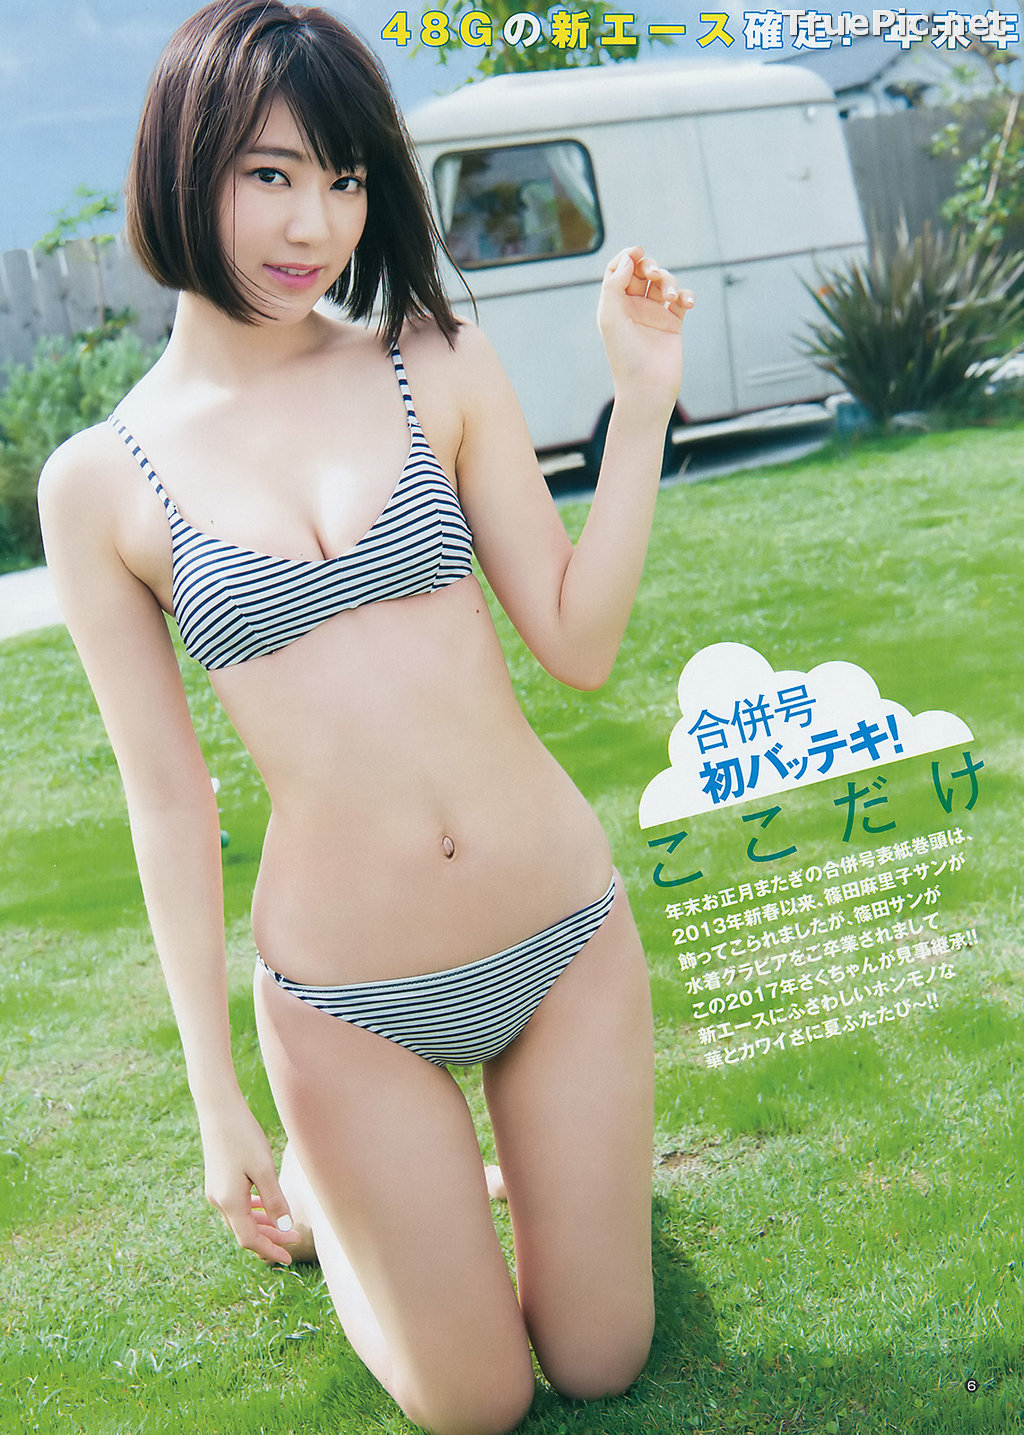 Image Japanese Singer and Actress - Sakura Miyawaki (宮脇咲良) - Sexy Picture Collection 2021 - TruePic.net - Picture-16